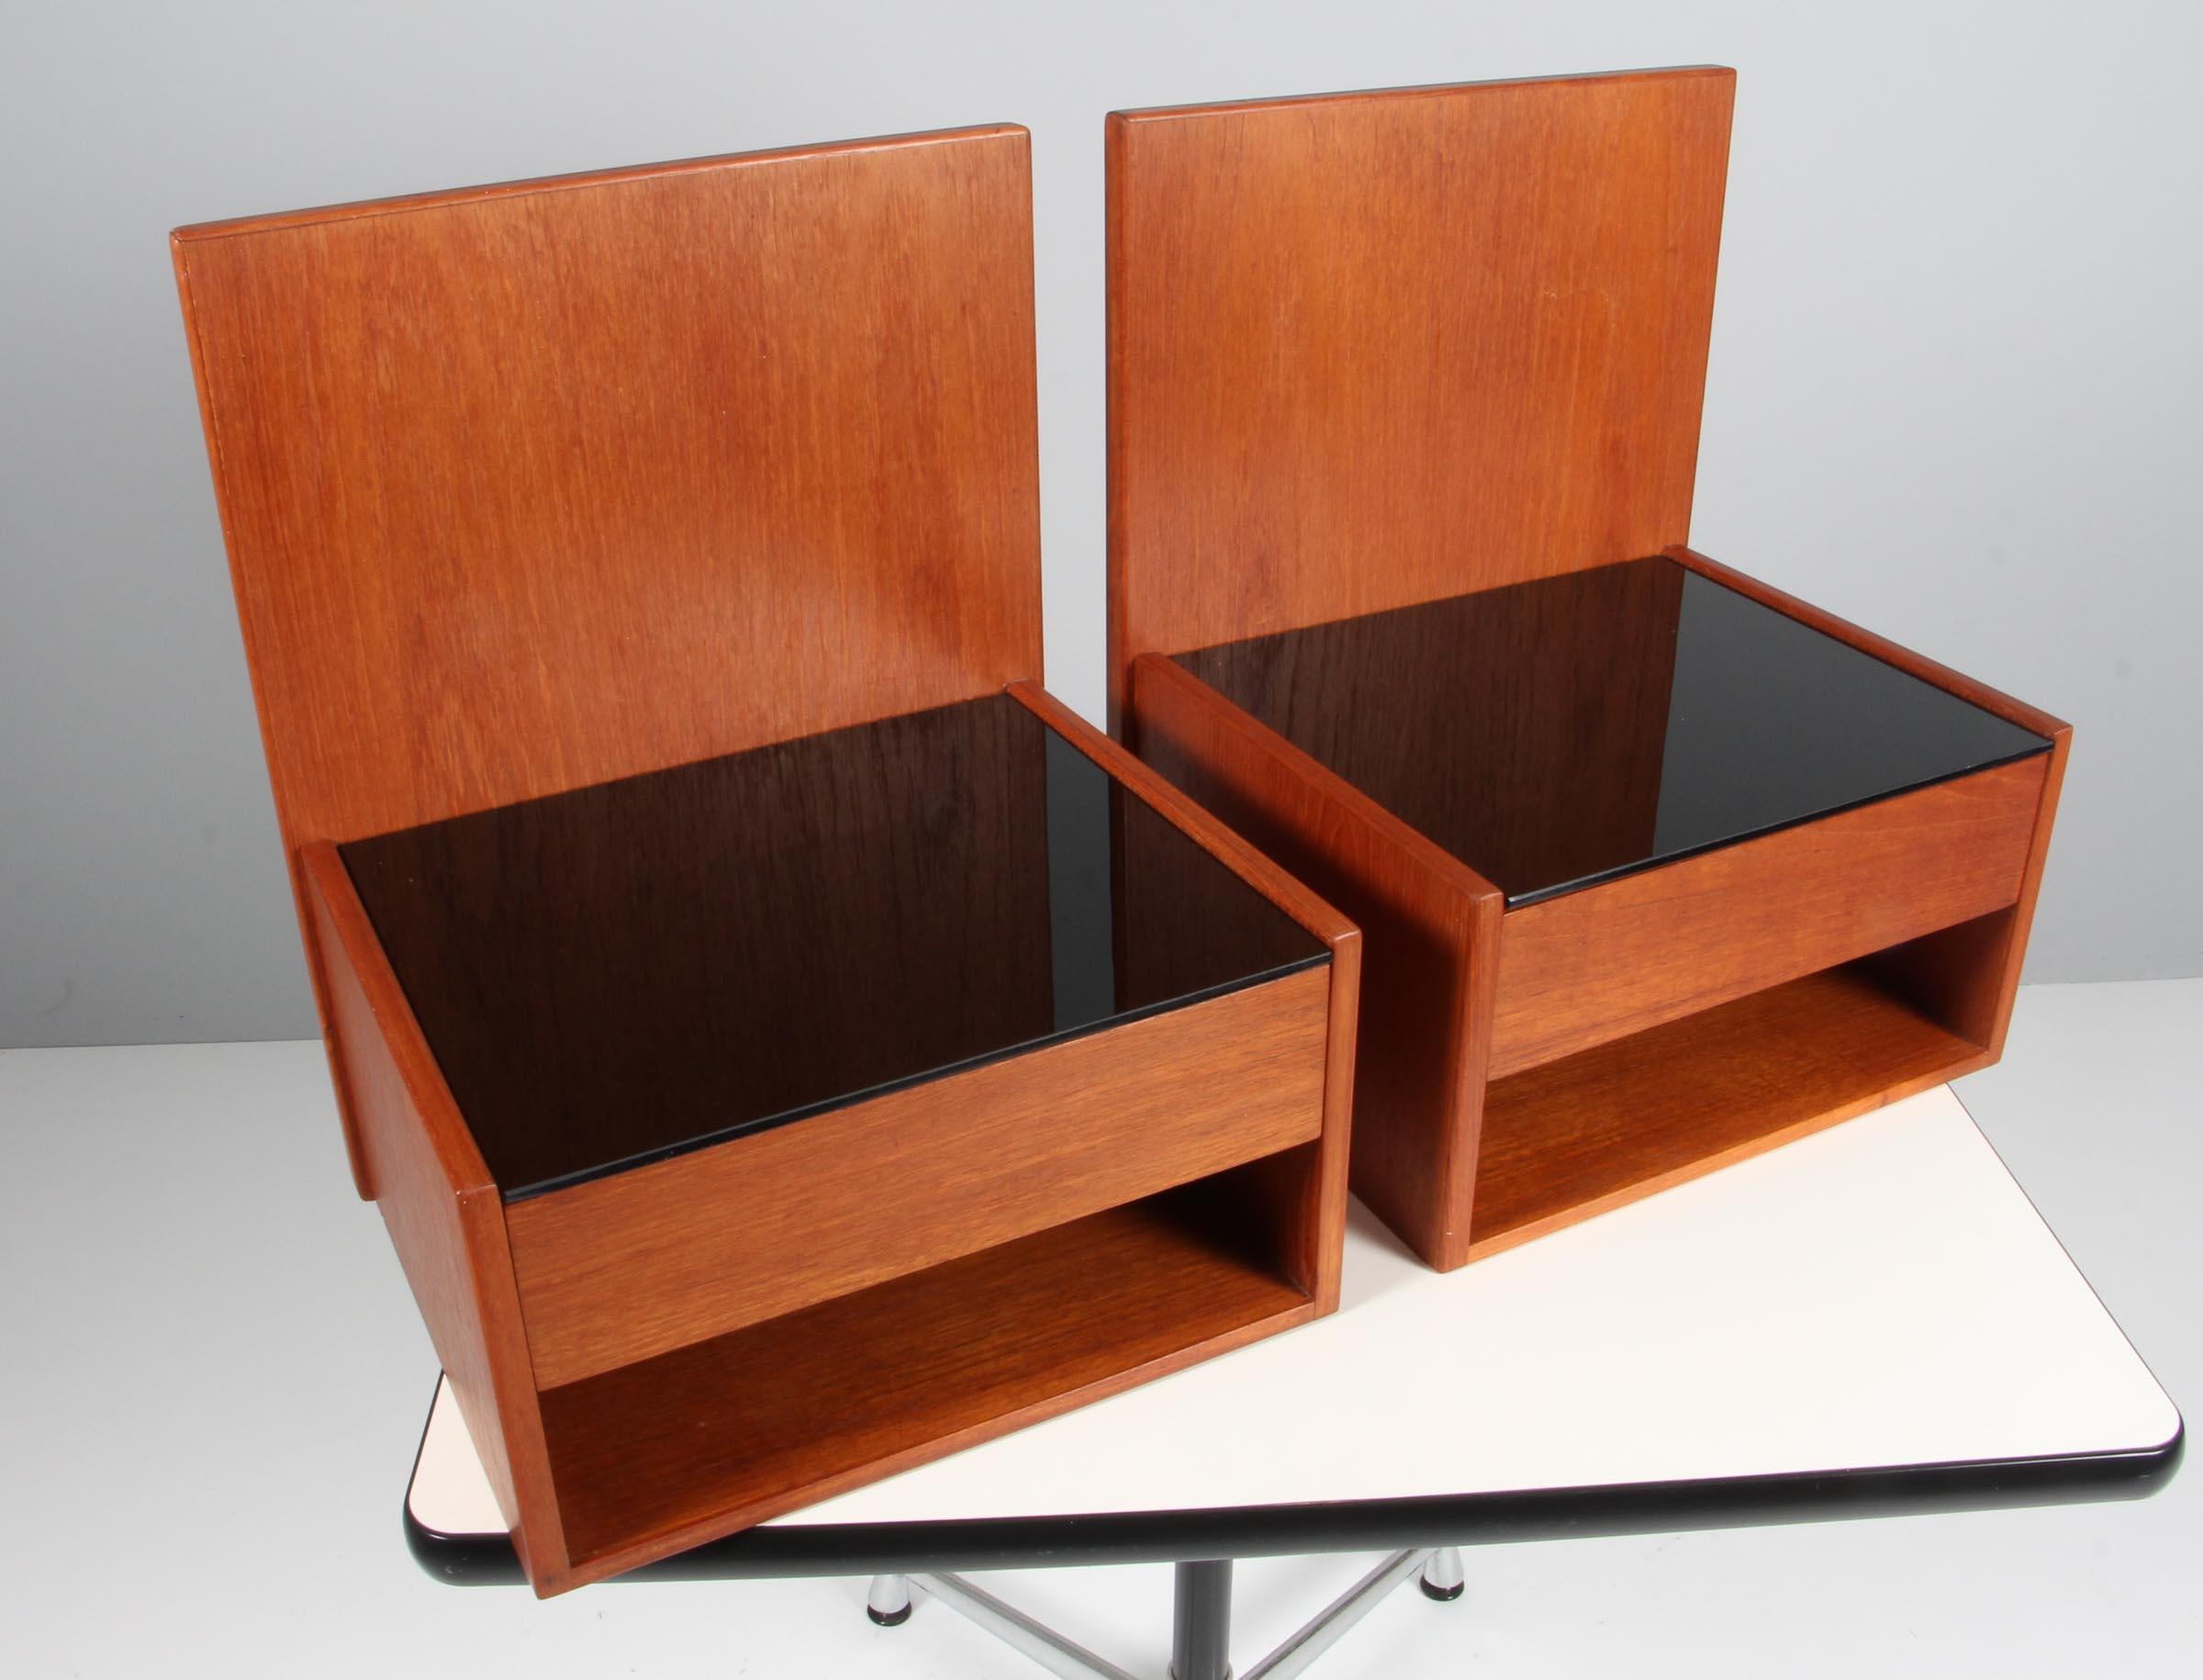 Pair of Wegner nightstands made in teak. Top of black glass.

One drawer.

Made by GETAMA in the 1960s.